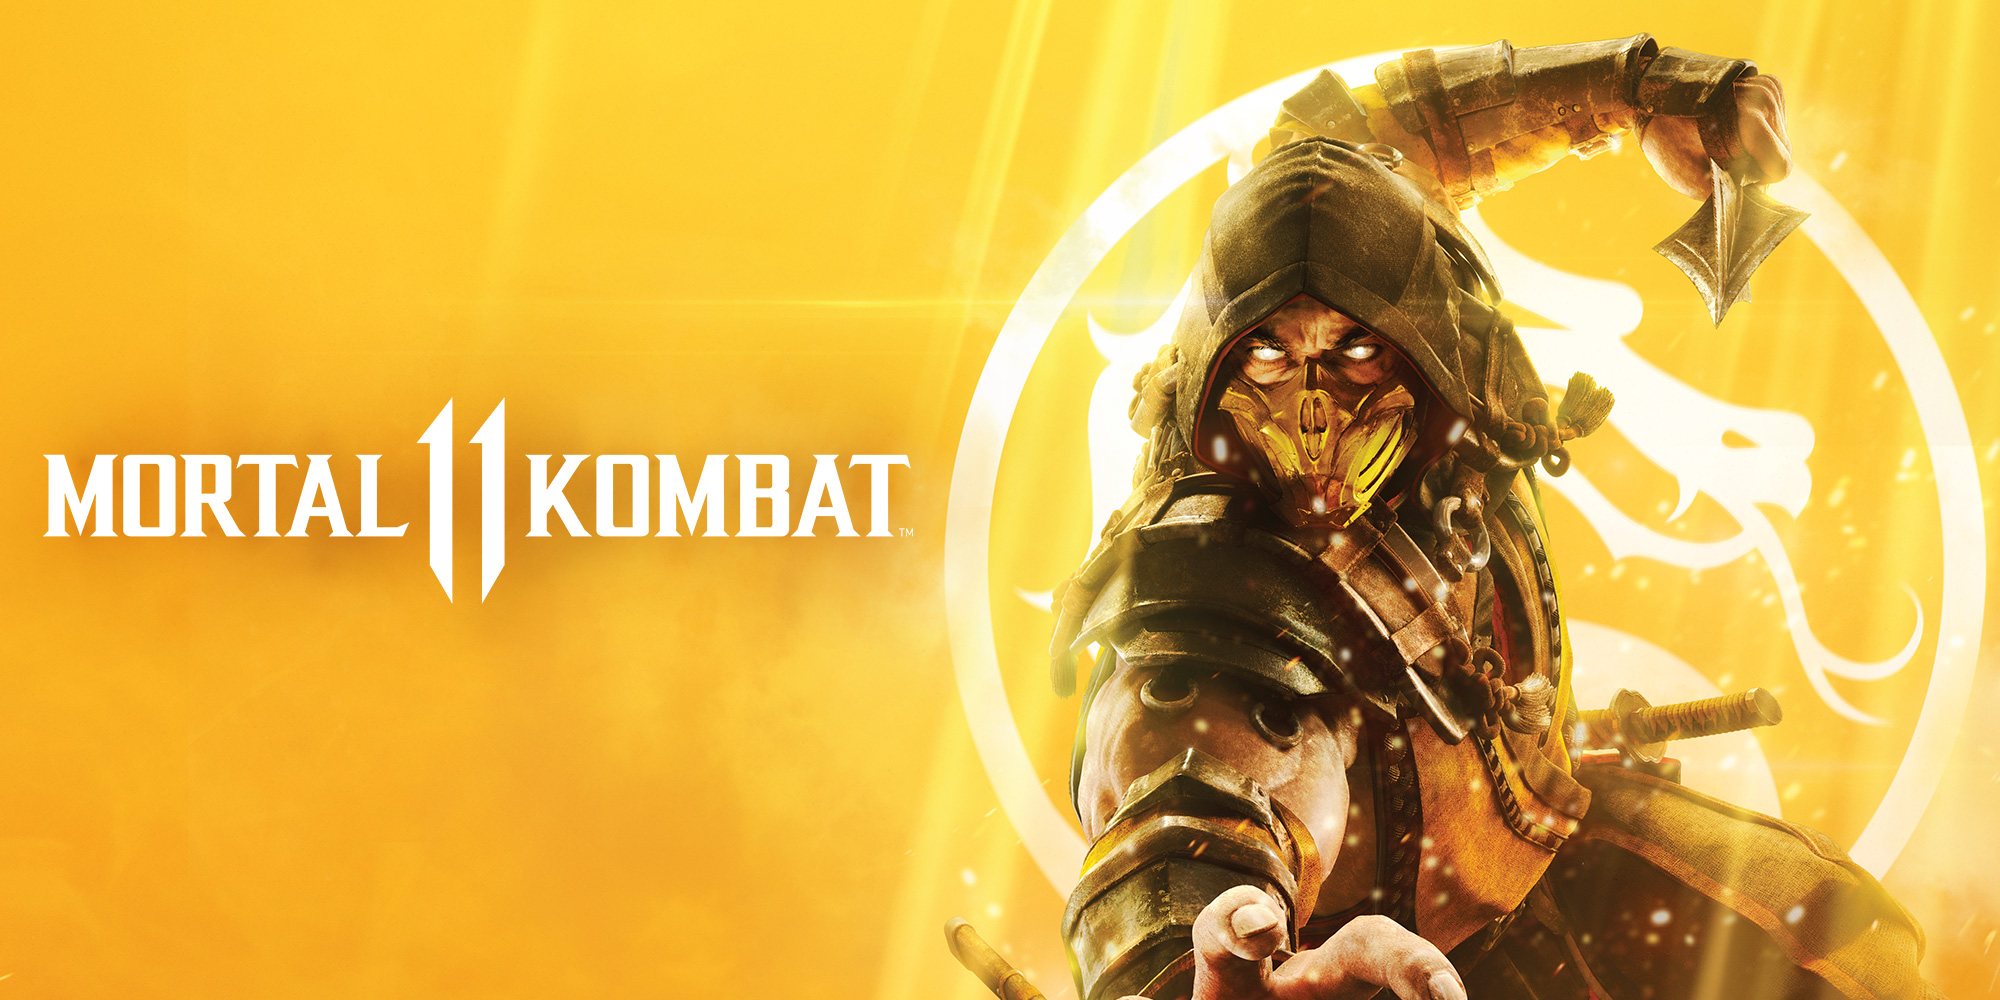 Mortal Kombat 11 [STEAM Key] Global🌍 + Gift🎁